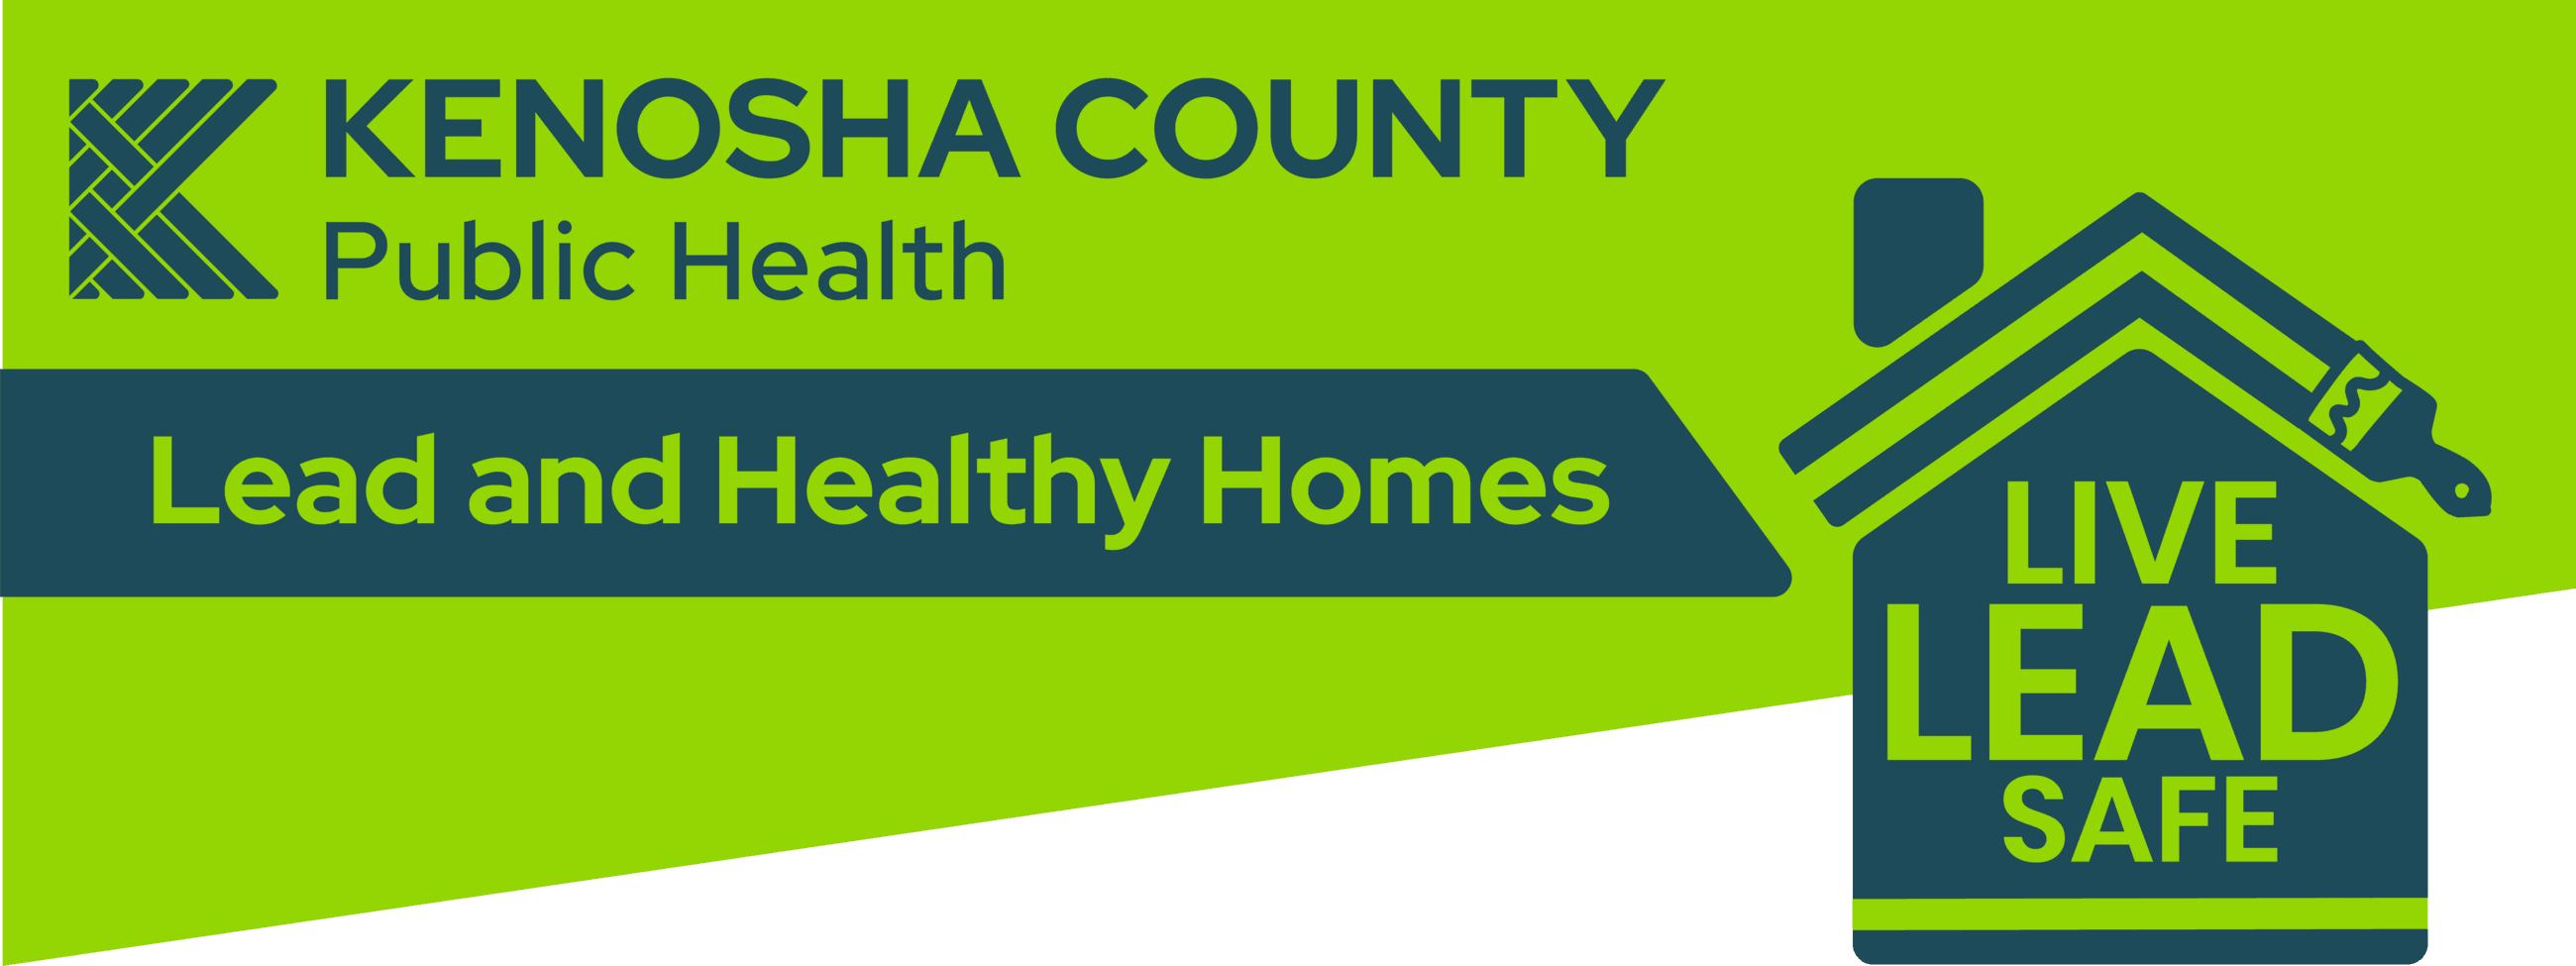 Kenosha County Public Health Lead and Healthy Homes / Live Lead Safe